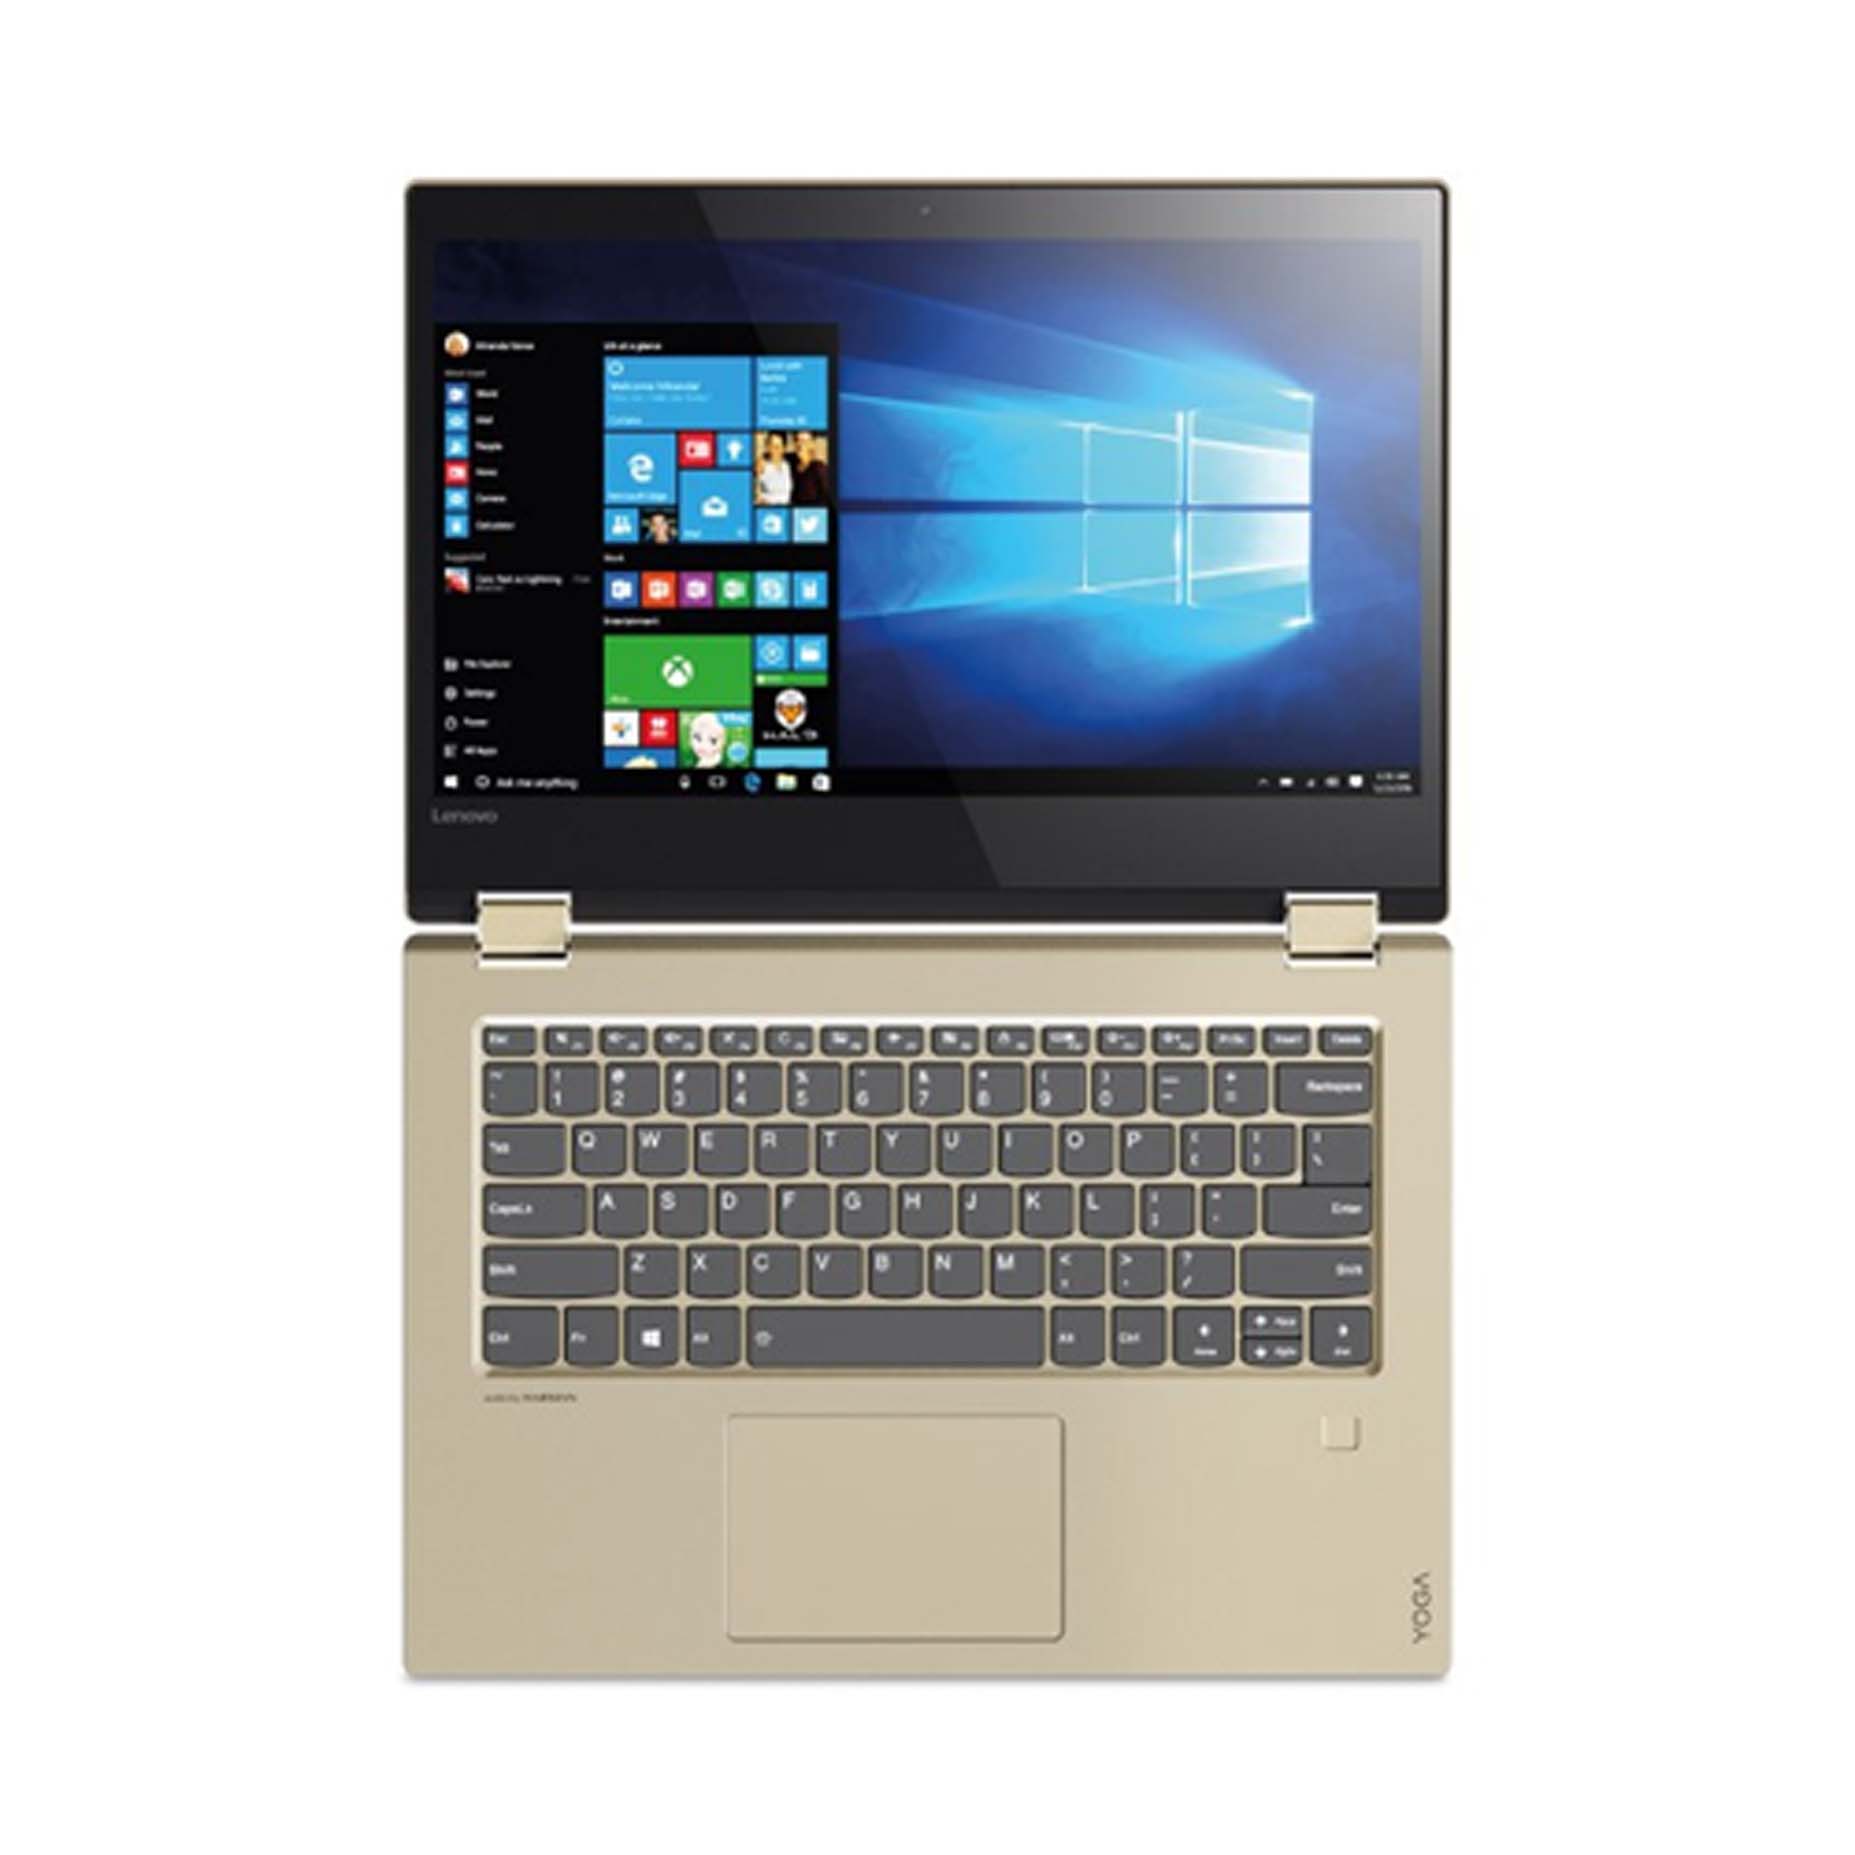 Harga Lenovo Ideapad Yoga 520-LI0ID 2-in-1 Multitouch Intel Core i3-7020 8GB 1TB VGA MX130 2GB Win 10 14 Inch Gold